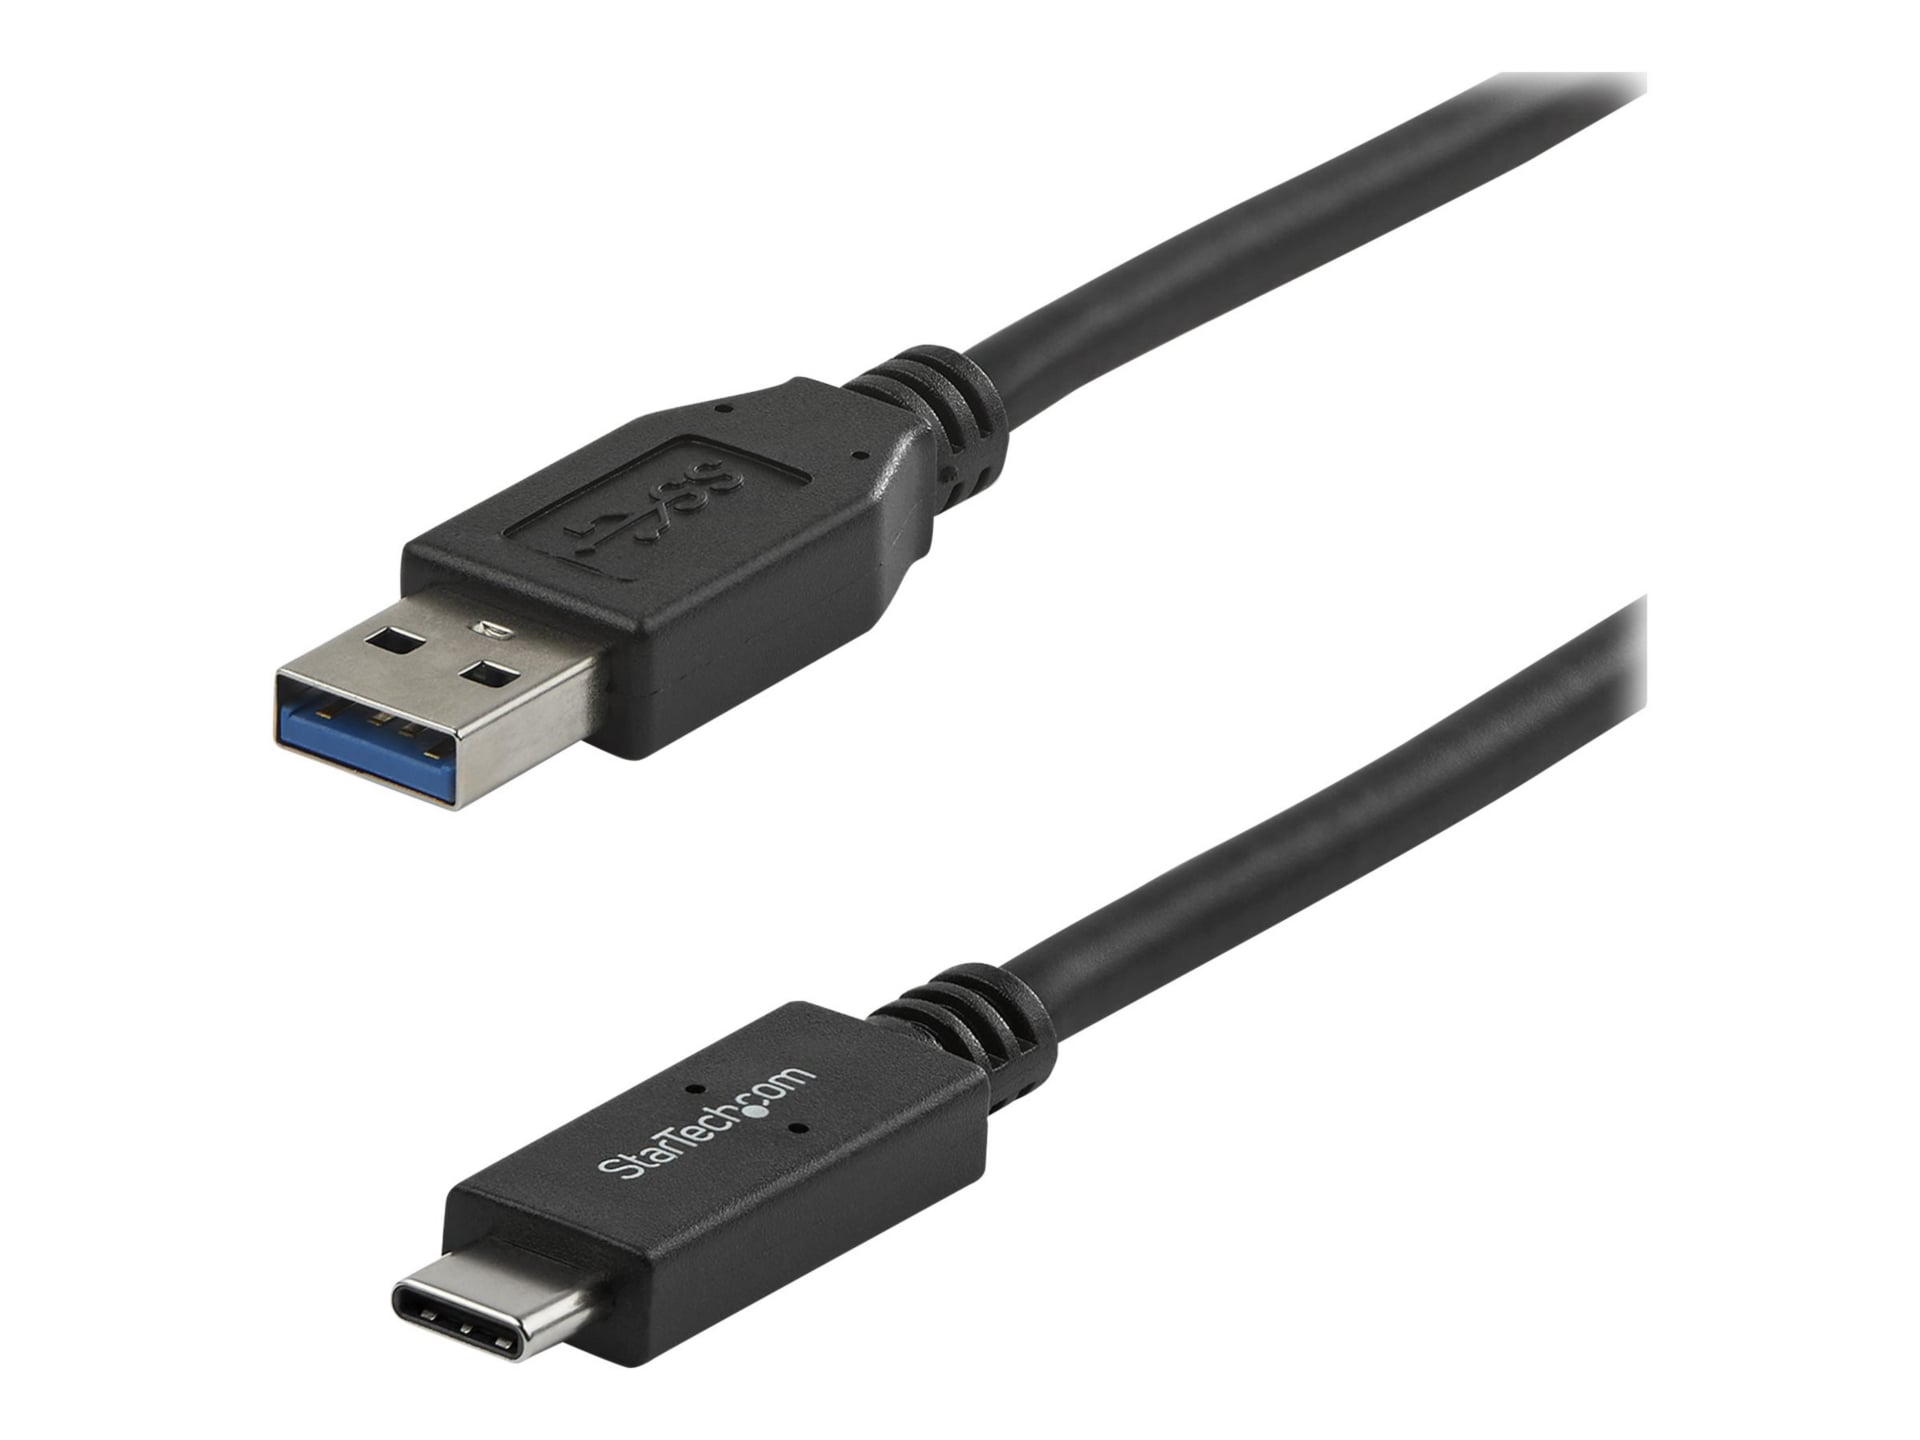 StarTech.com 3 ft 1m USB to USB C Cable - USB 3.1 (10Gpbs) - USB-IF  Certified - USB A to USB C Cable - USB 3.1 Type C